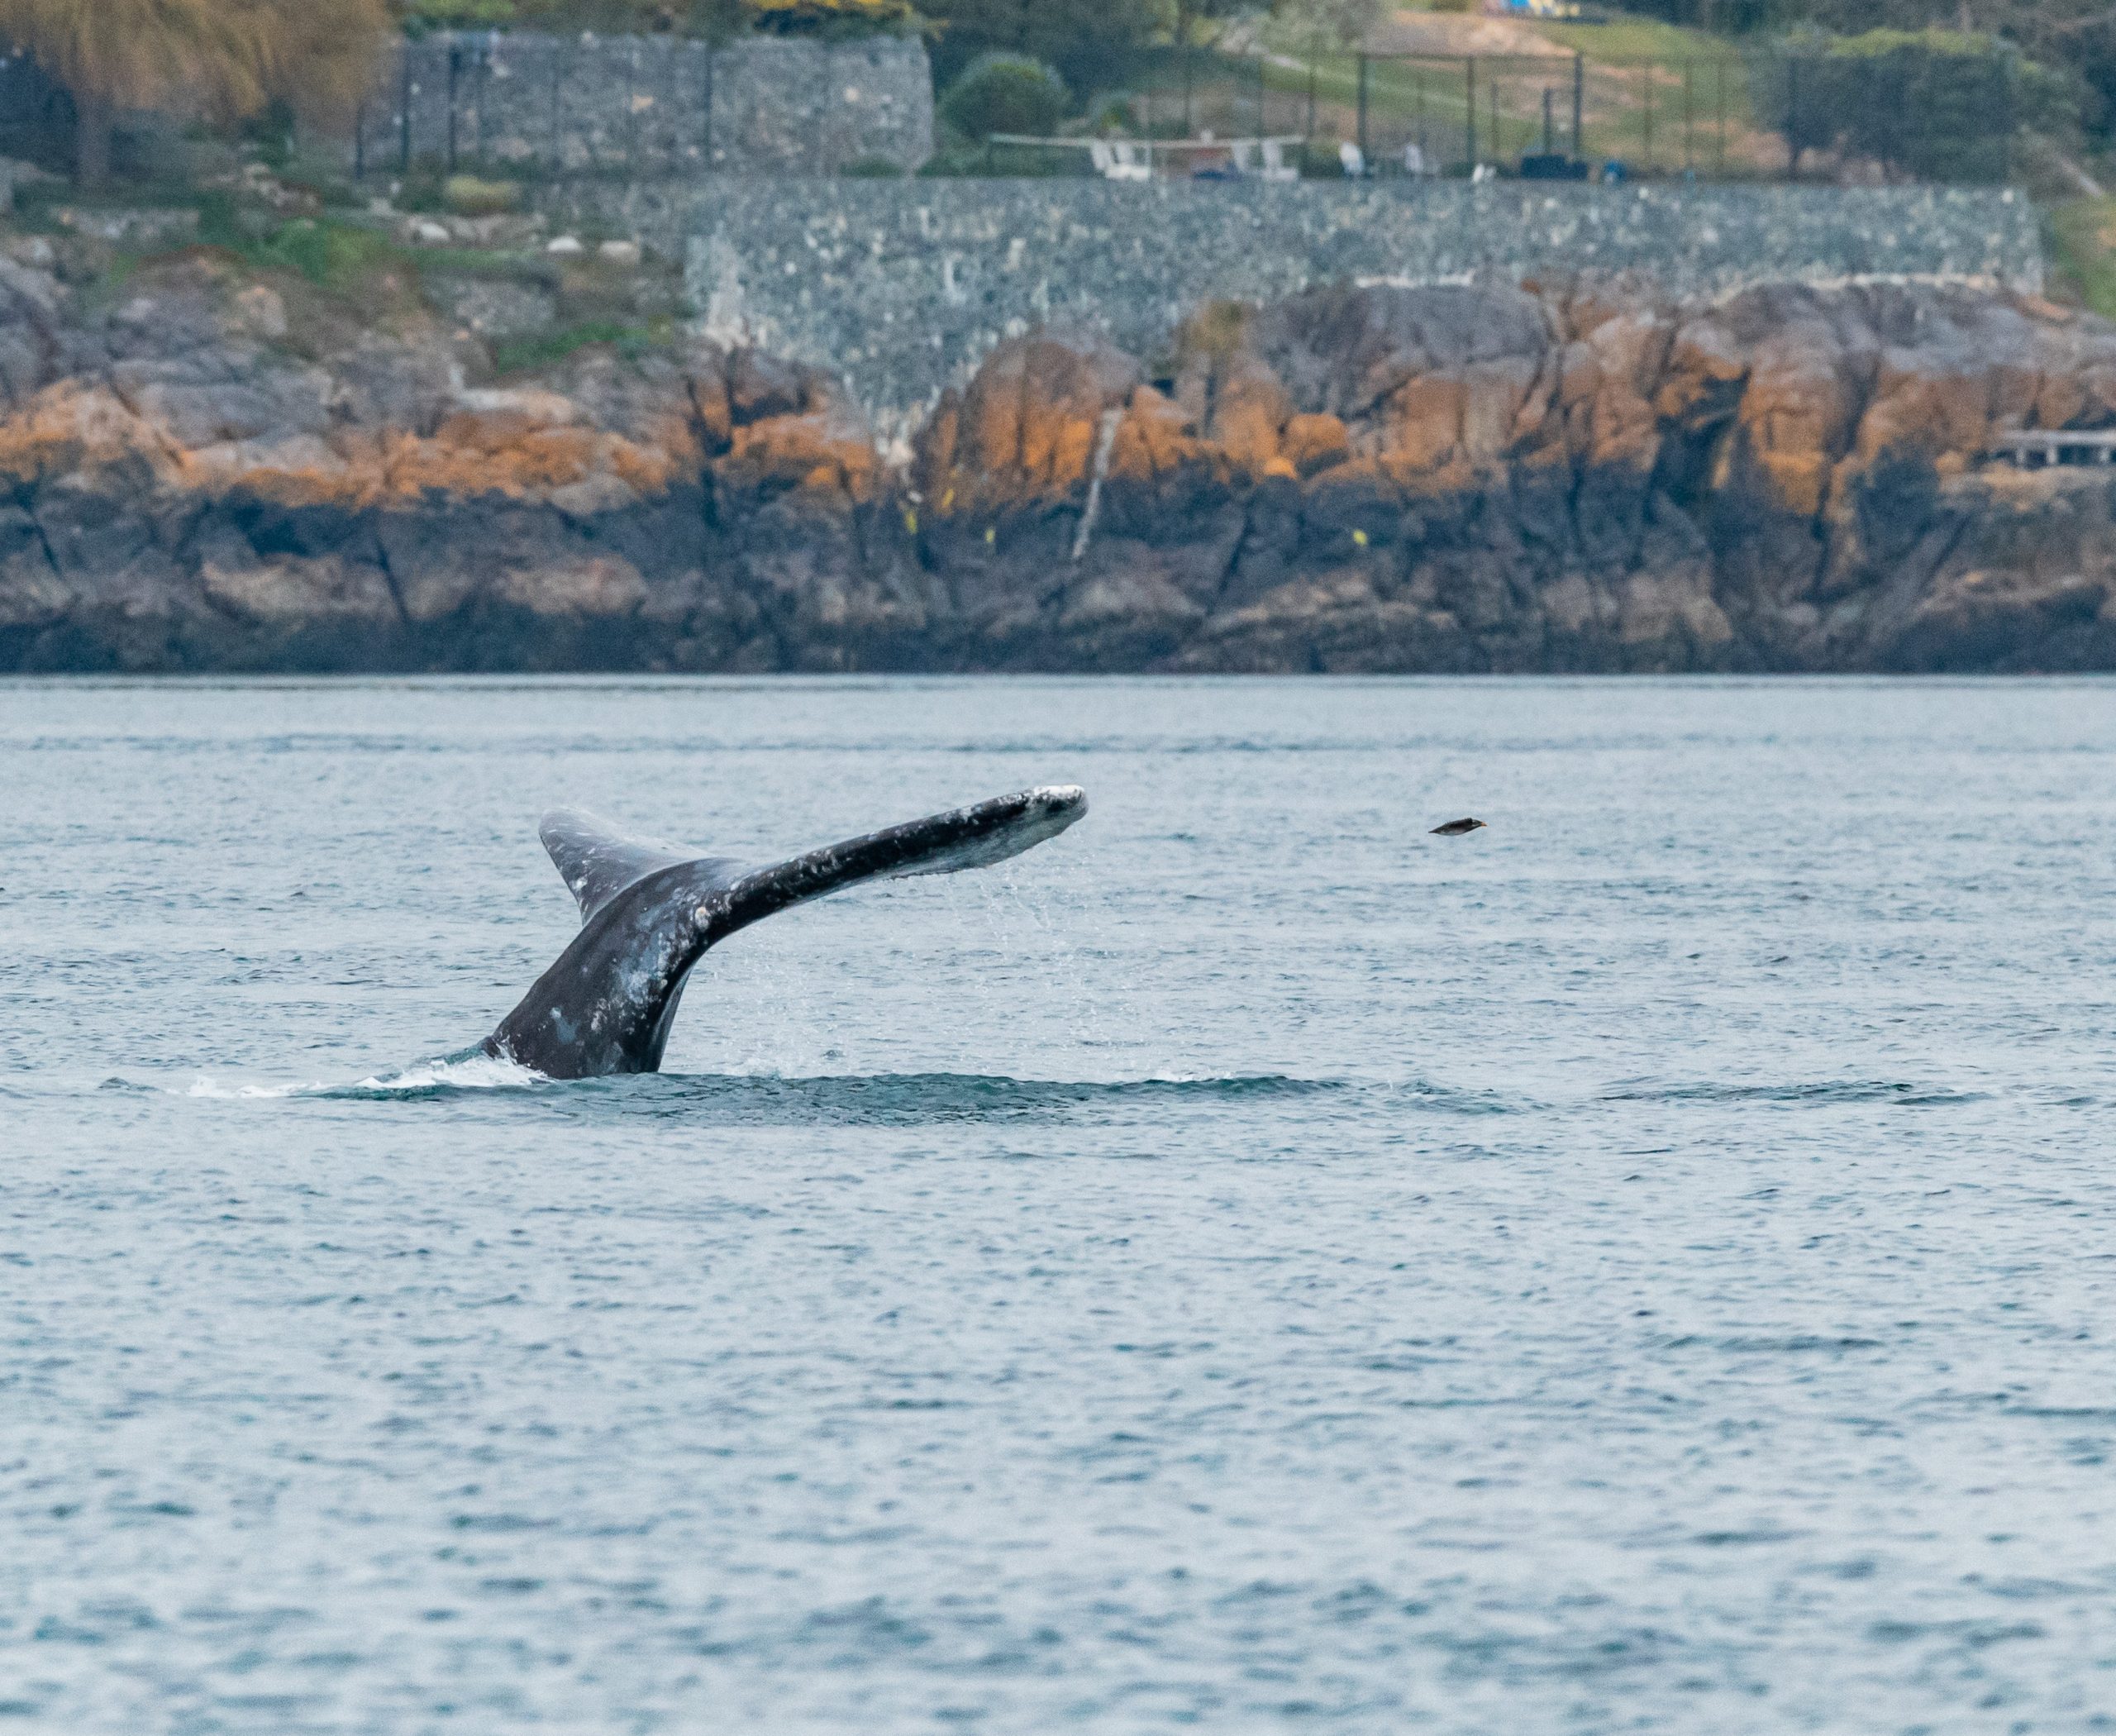 https://orcaspirit.com/wordpress/wp-content/uploads/2022/12/humpback-whales-harbour-porpoises.jpg